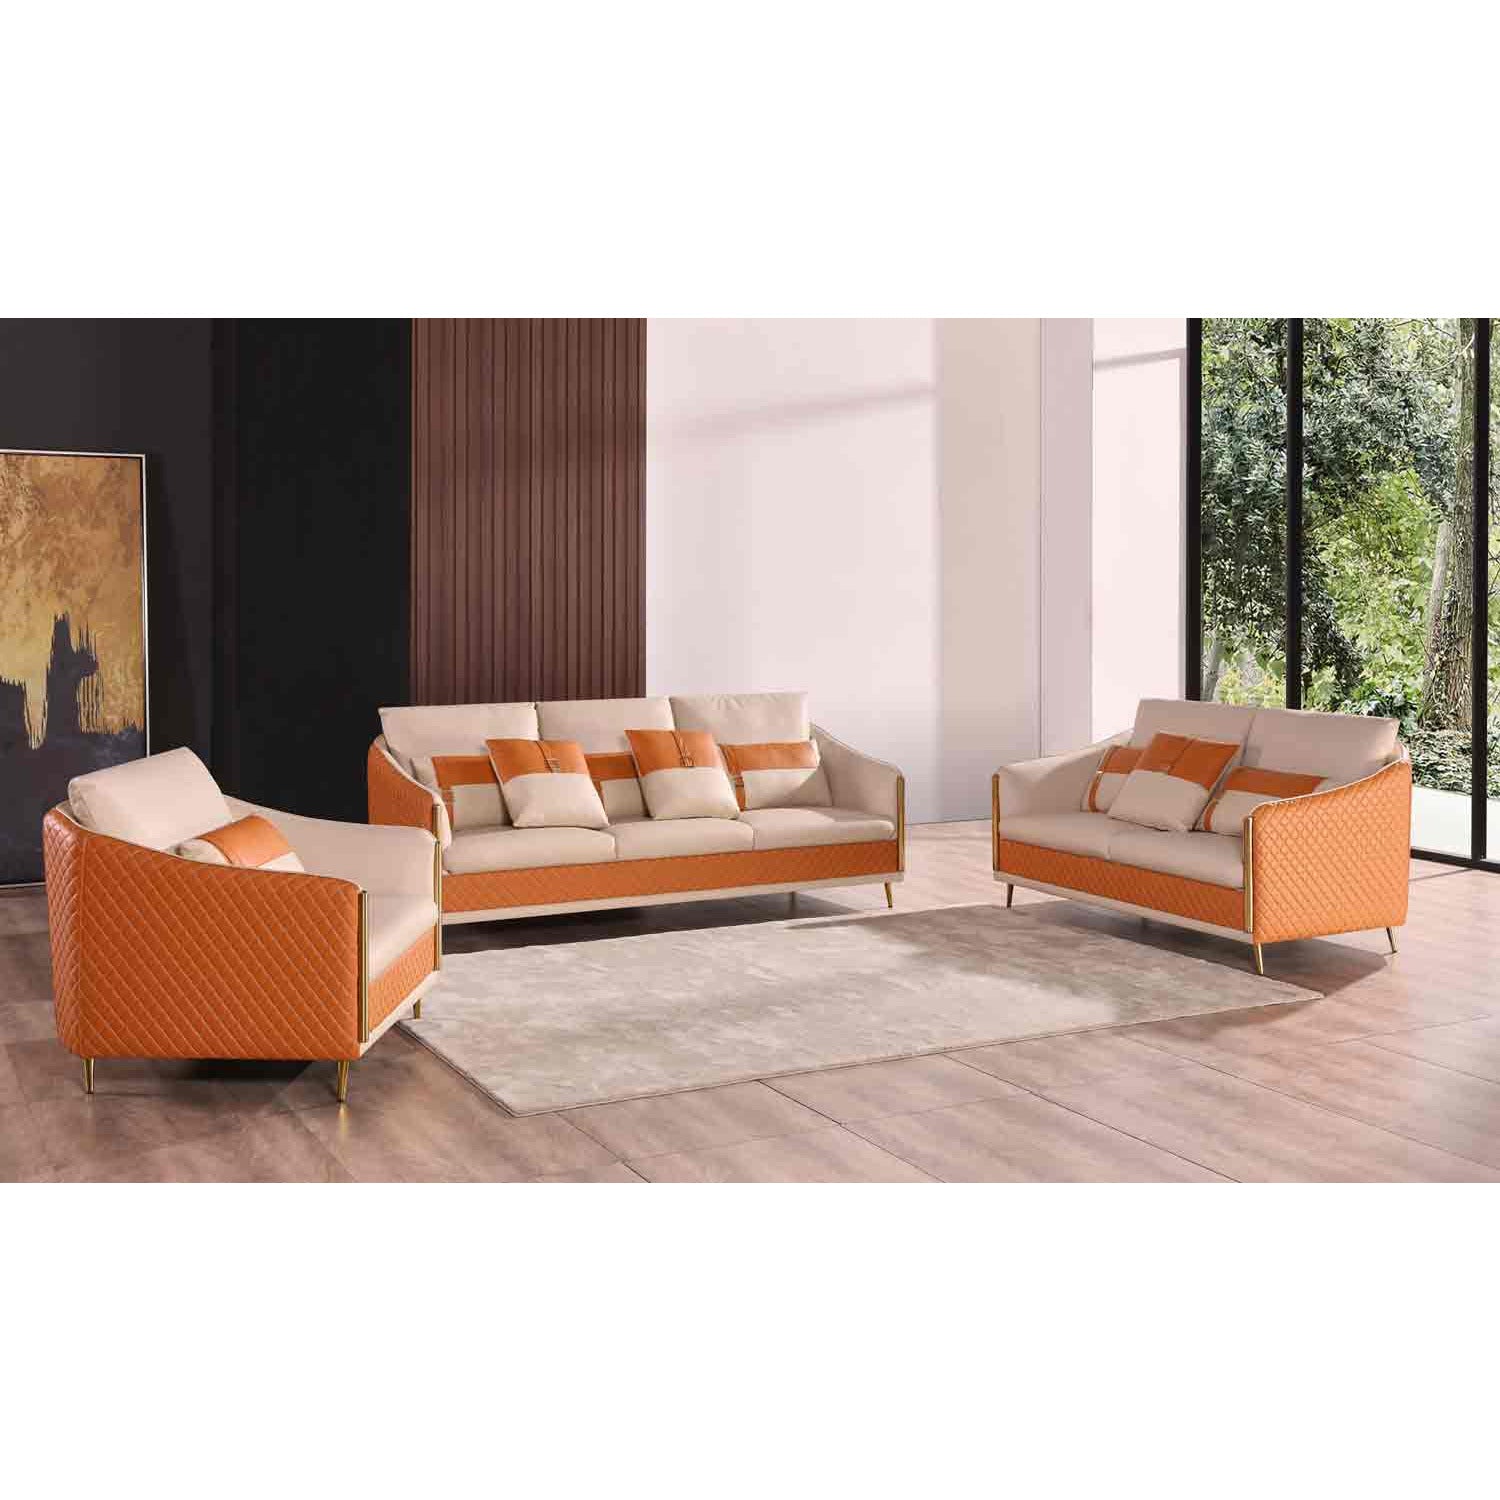 European Furniture - Icaro Loveseat in Off White-Orange - 64455-L - New Star Living